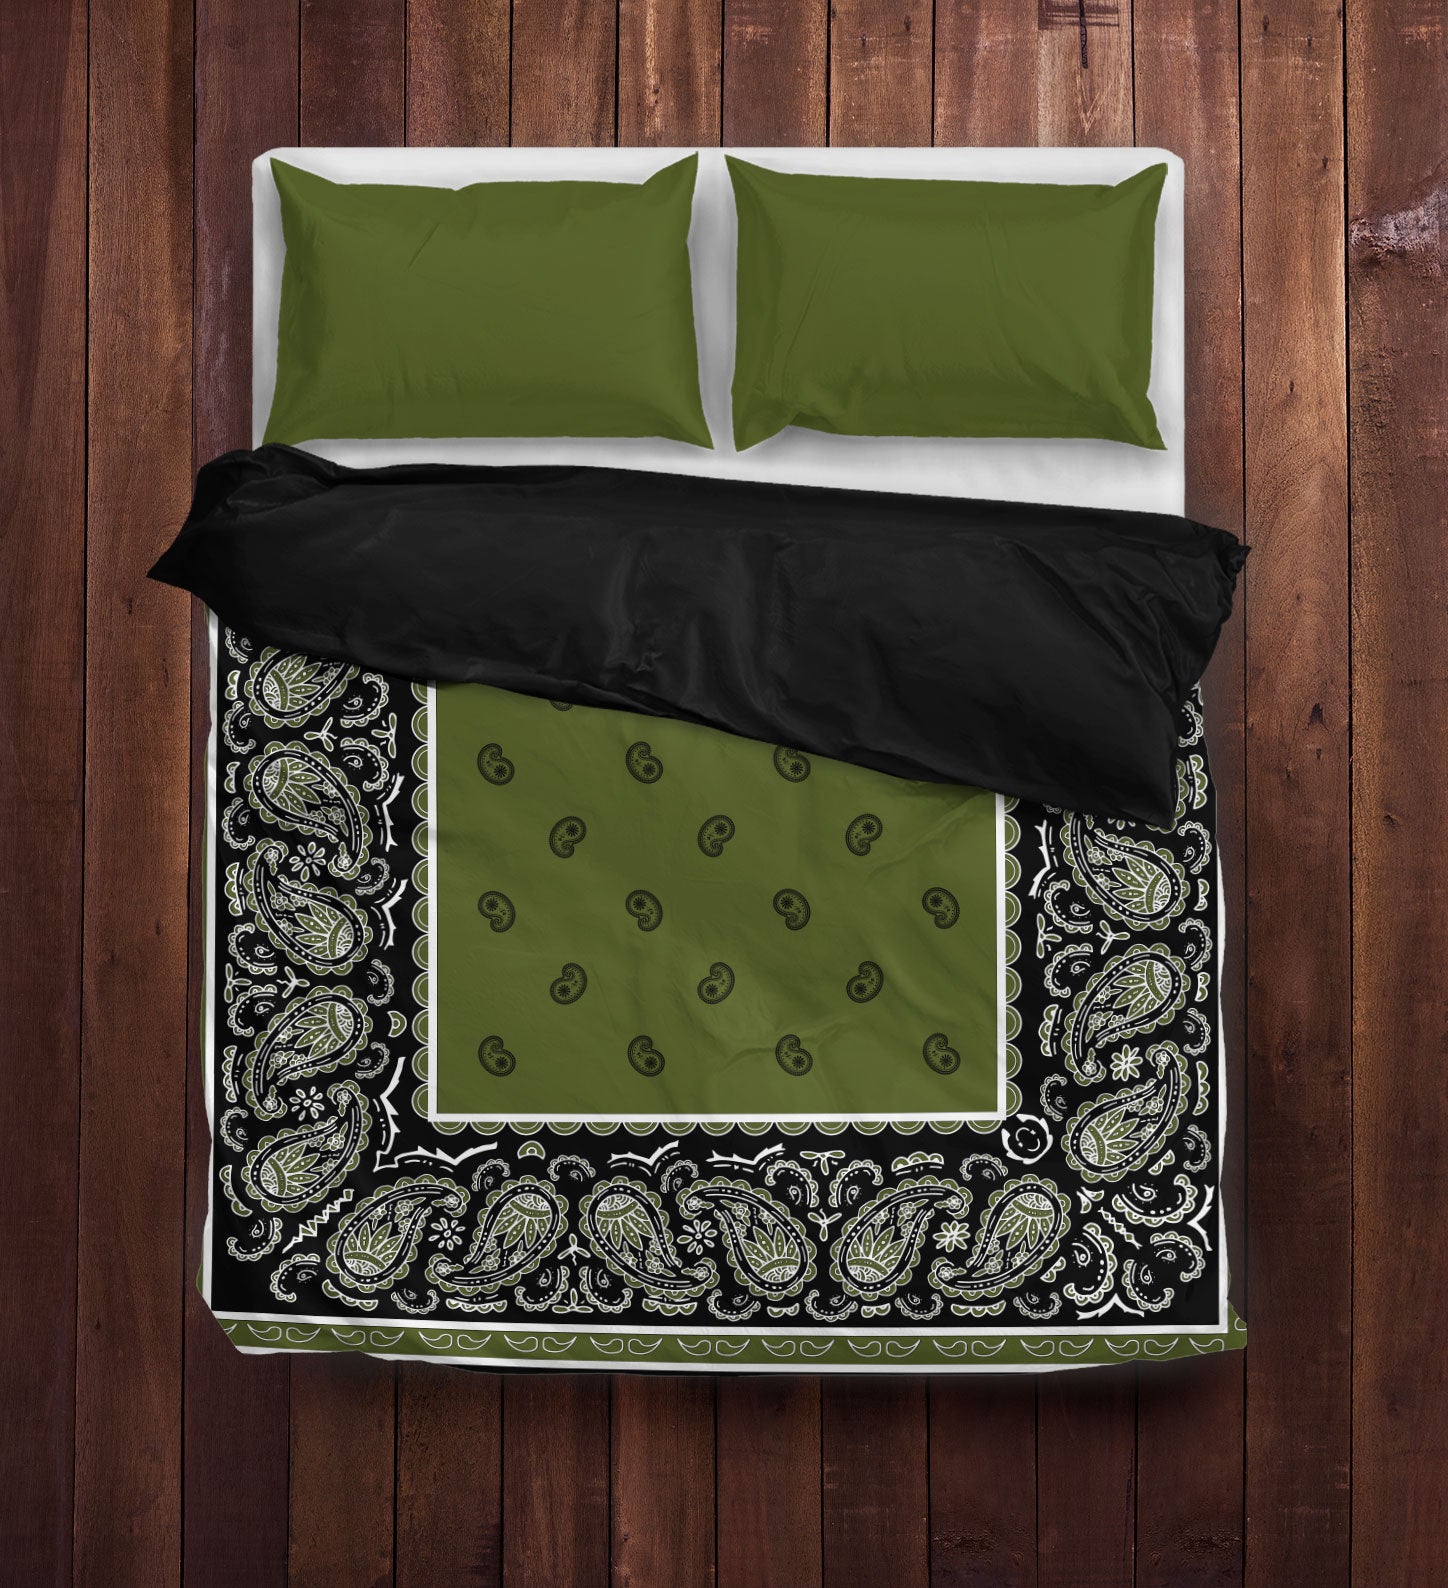 Army Green And Black Bandana Duvet Cover The Bandana Blanket Company